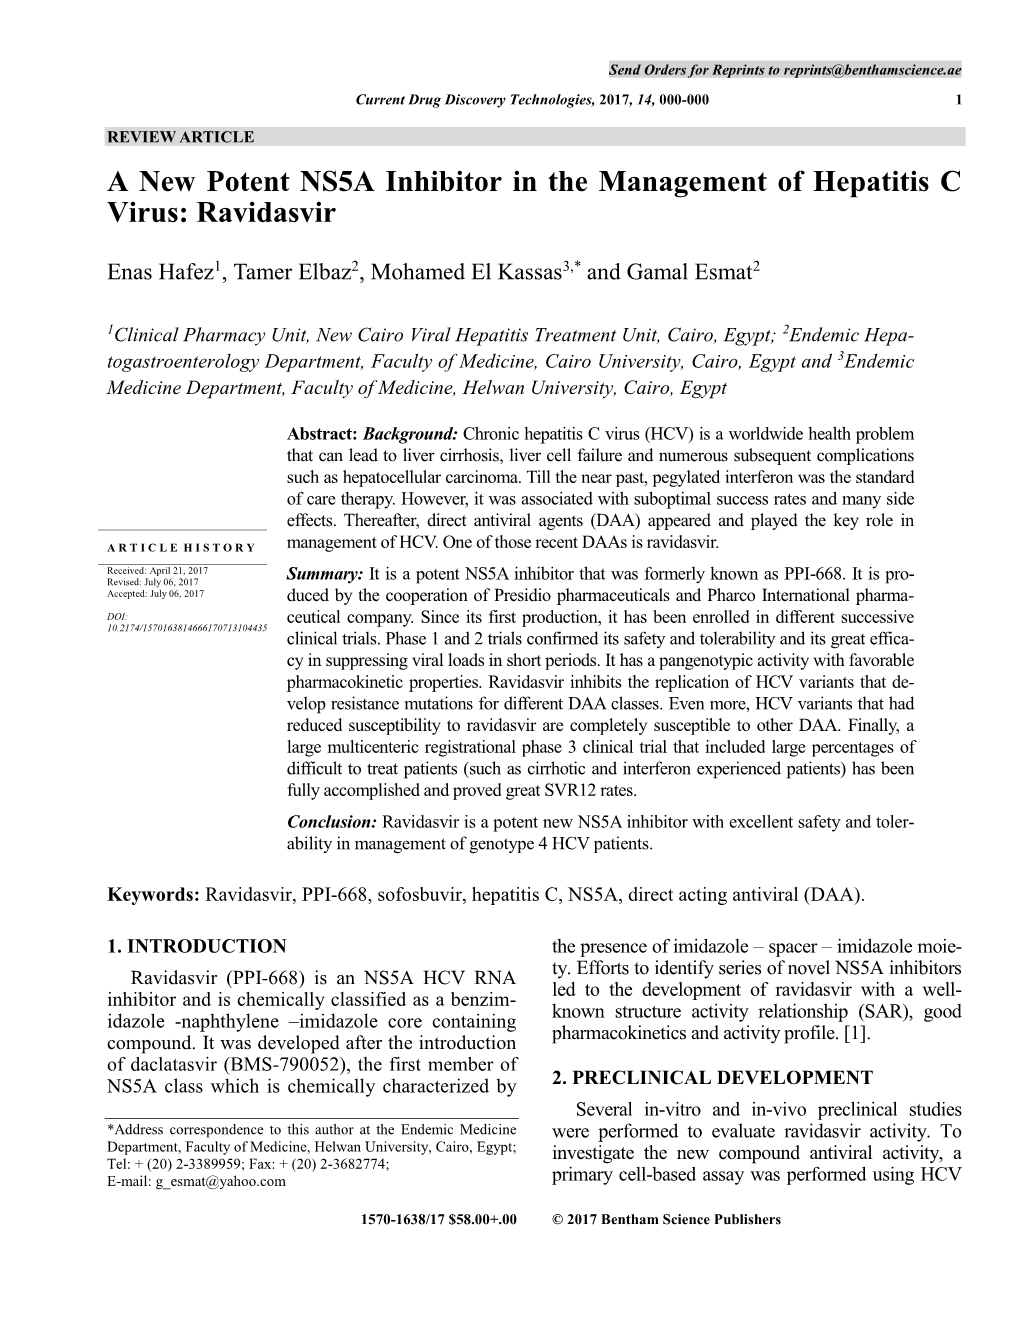 A New Potent NS5A Inhibitor in the Management of Hepatitis C Virus: Ravidasvir